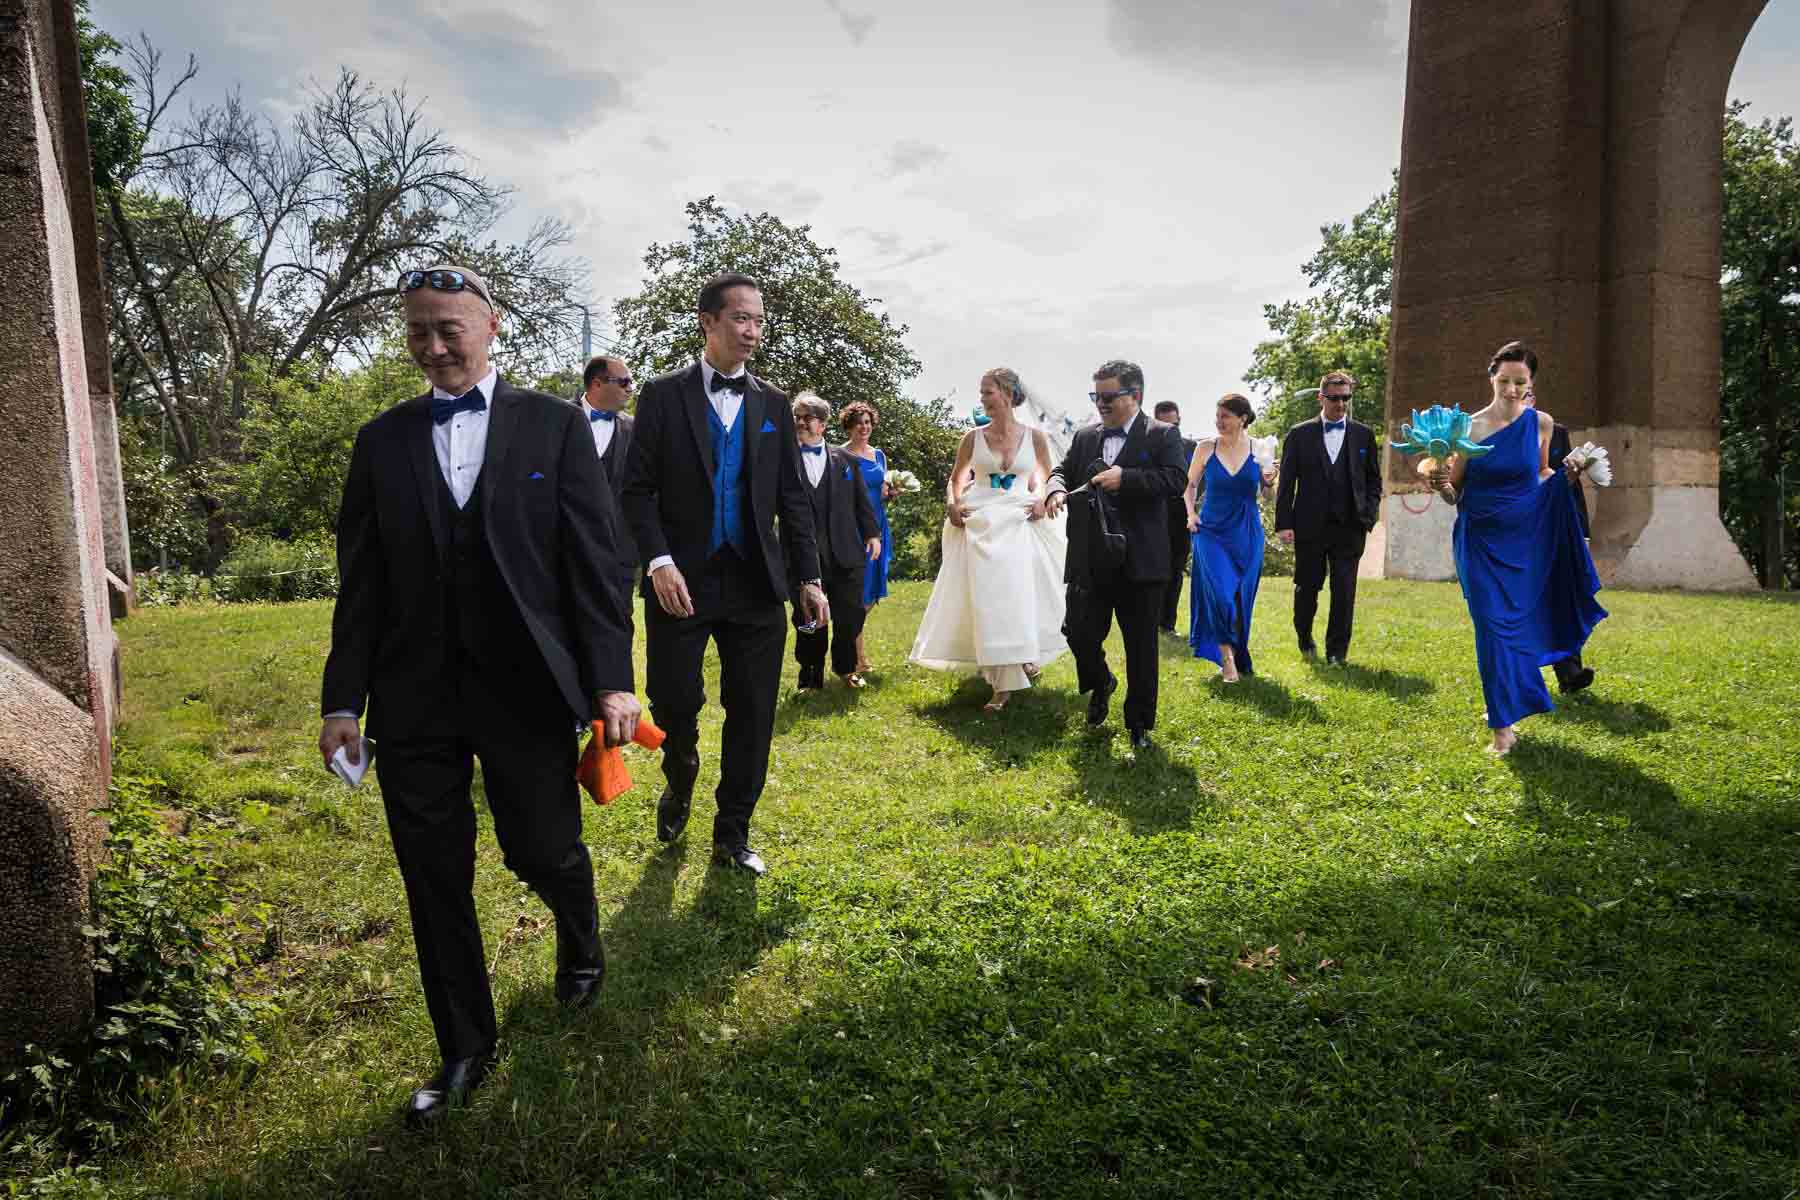 Bride, groom, and bridal party walking in Astoria Park